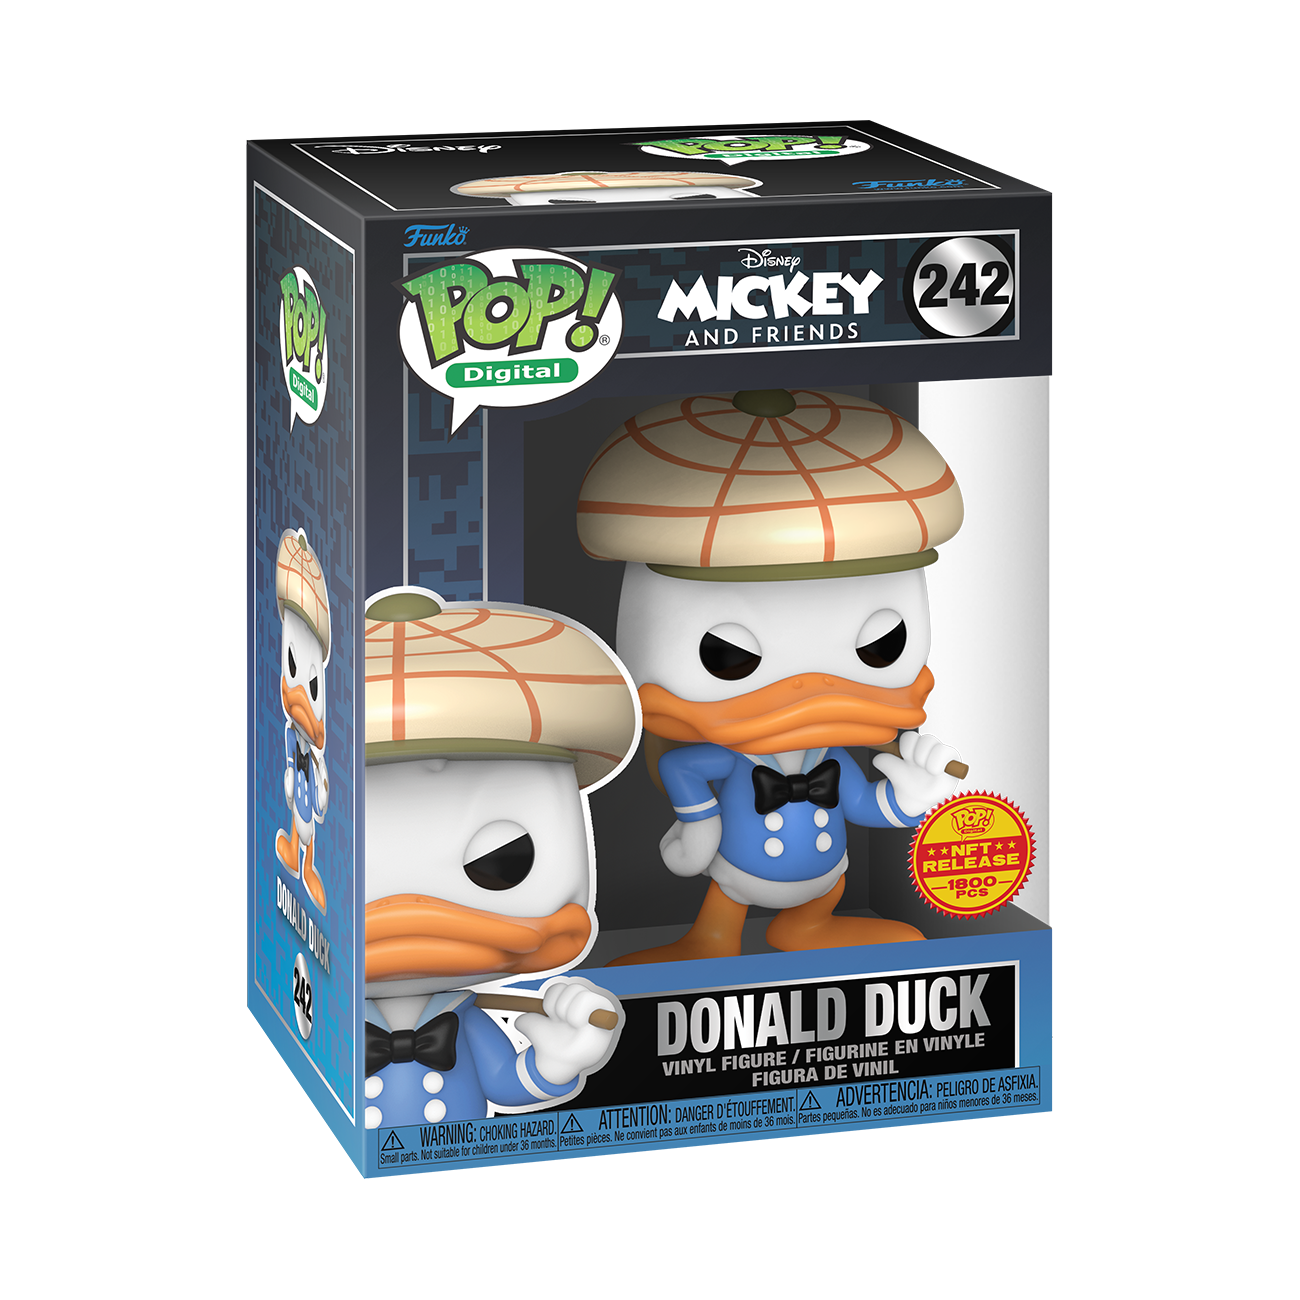 Disney’s Mickey and Friends: Funko Digital Pop! Series 1 Donald Duck